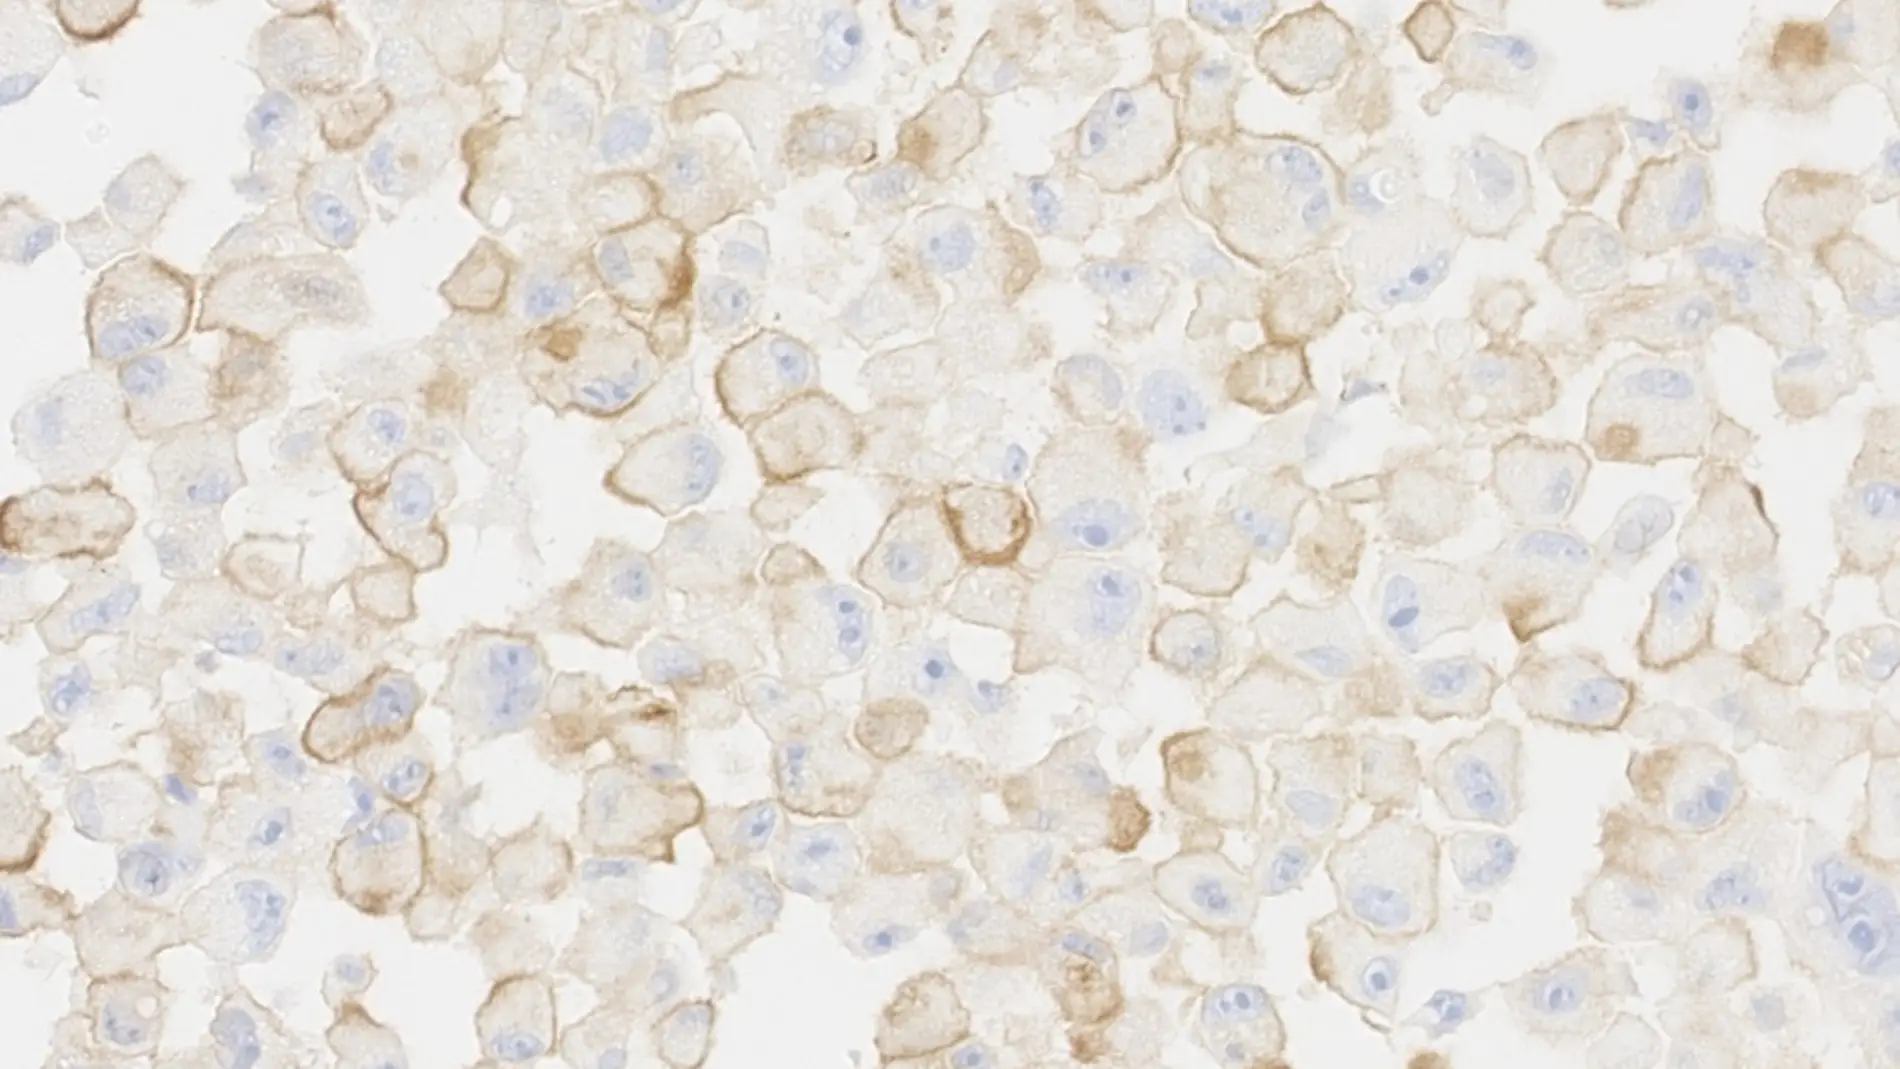 Células tumorales senescentes de melanoma humano